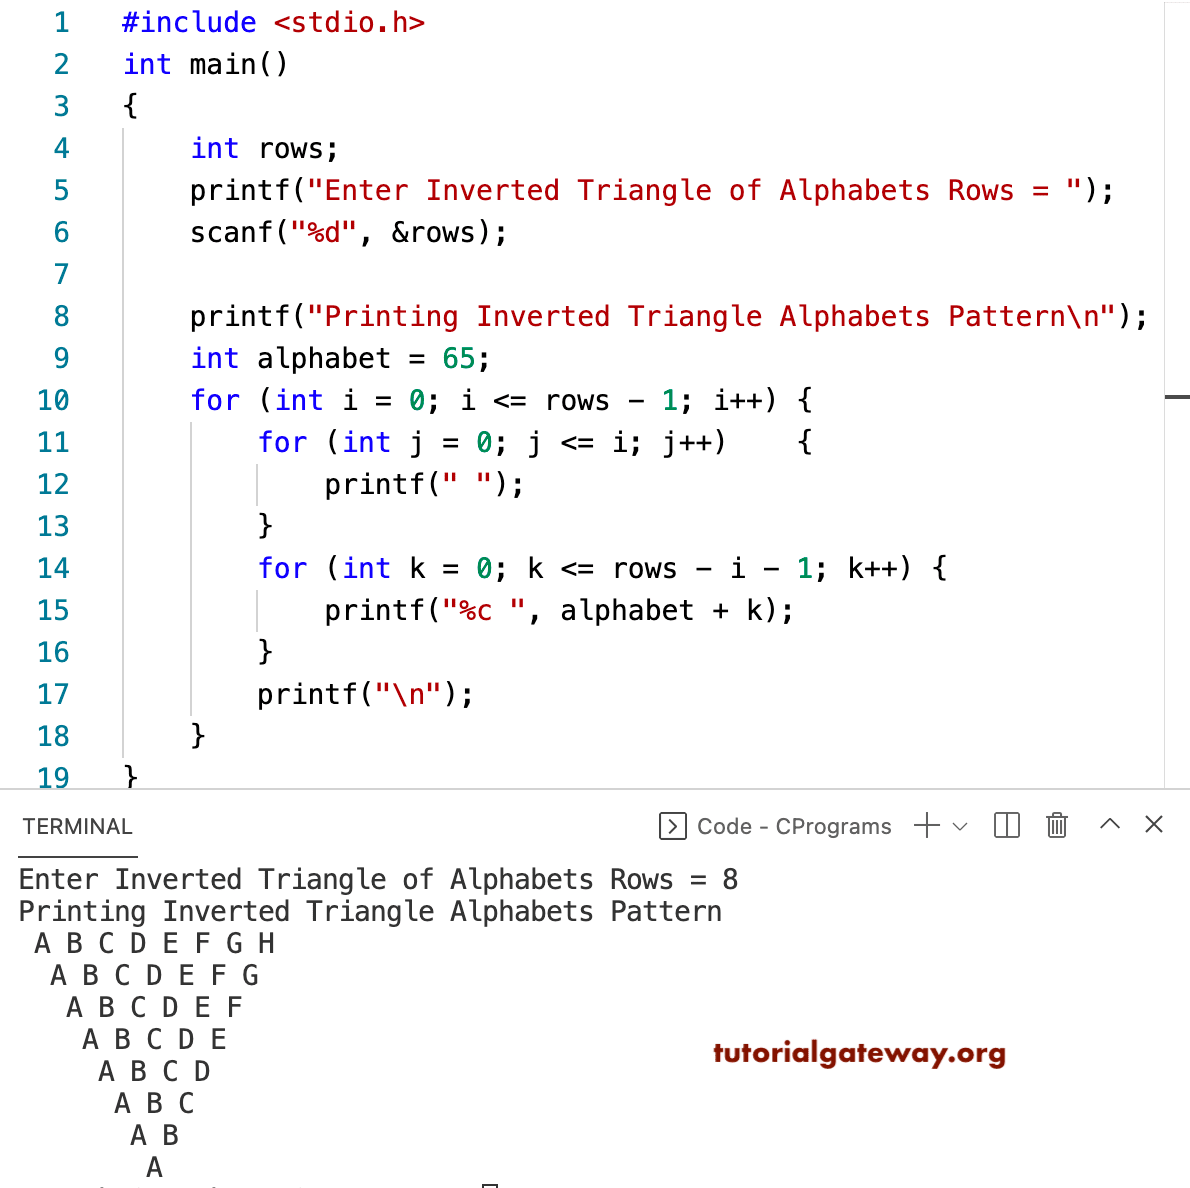 C Program to Print Inverted Triangle Alphabets Pattern